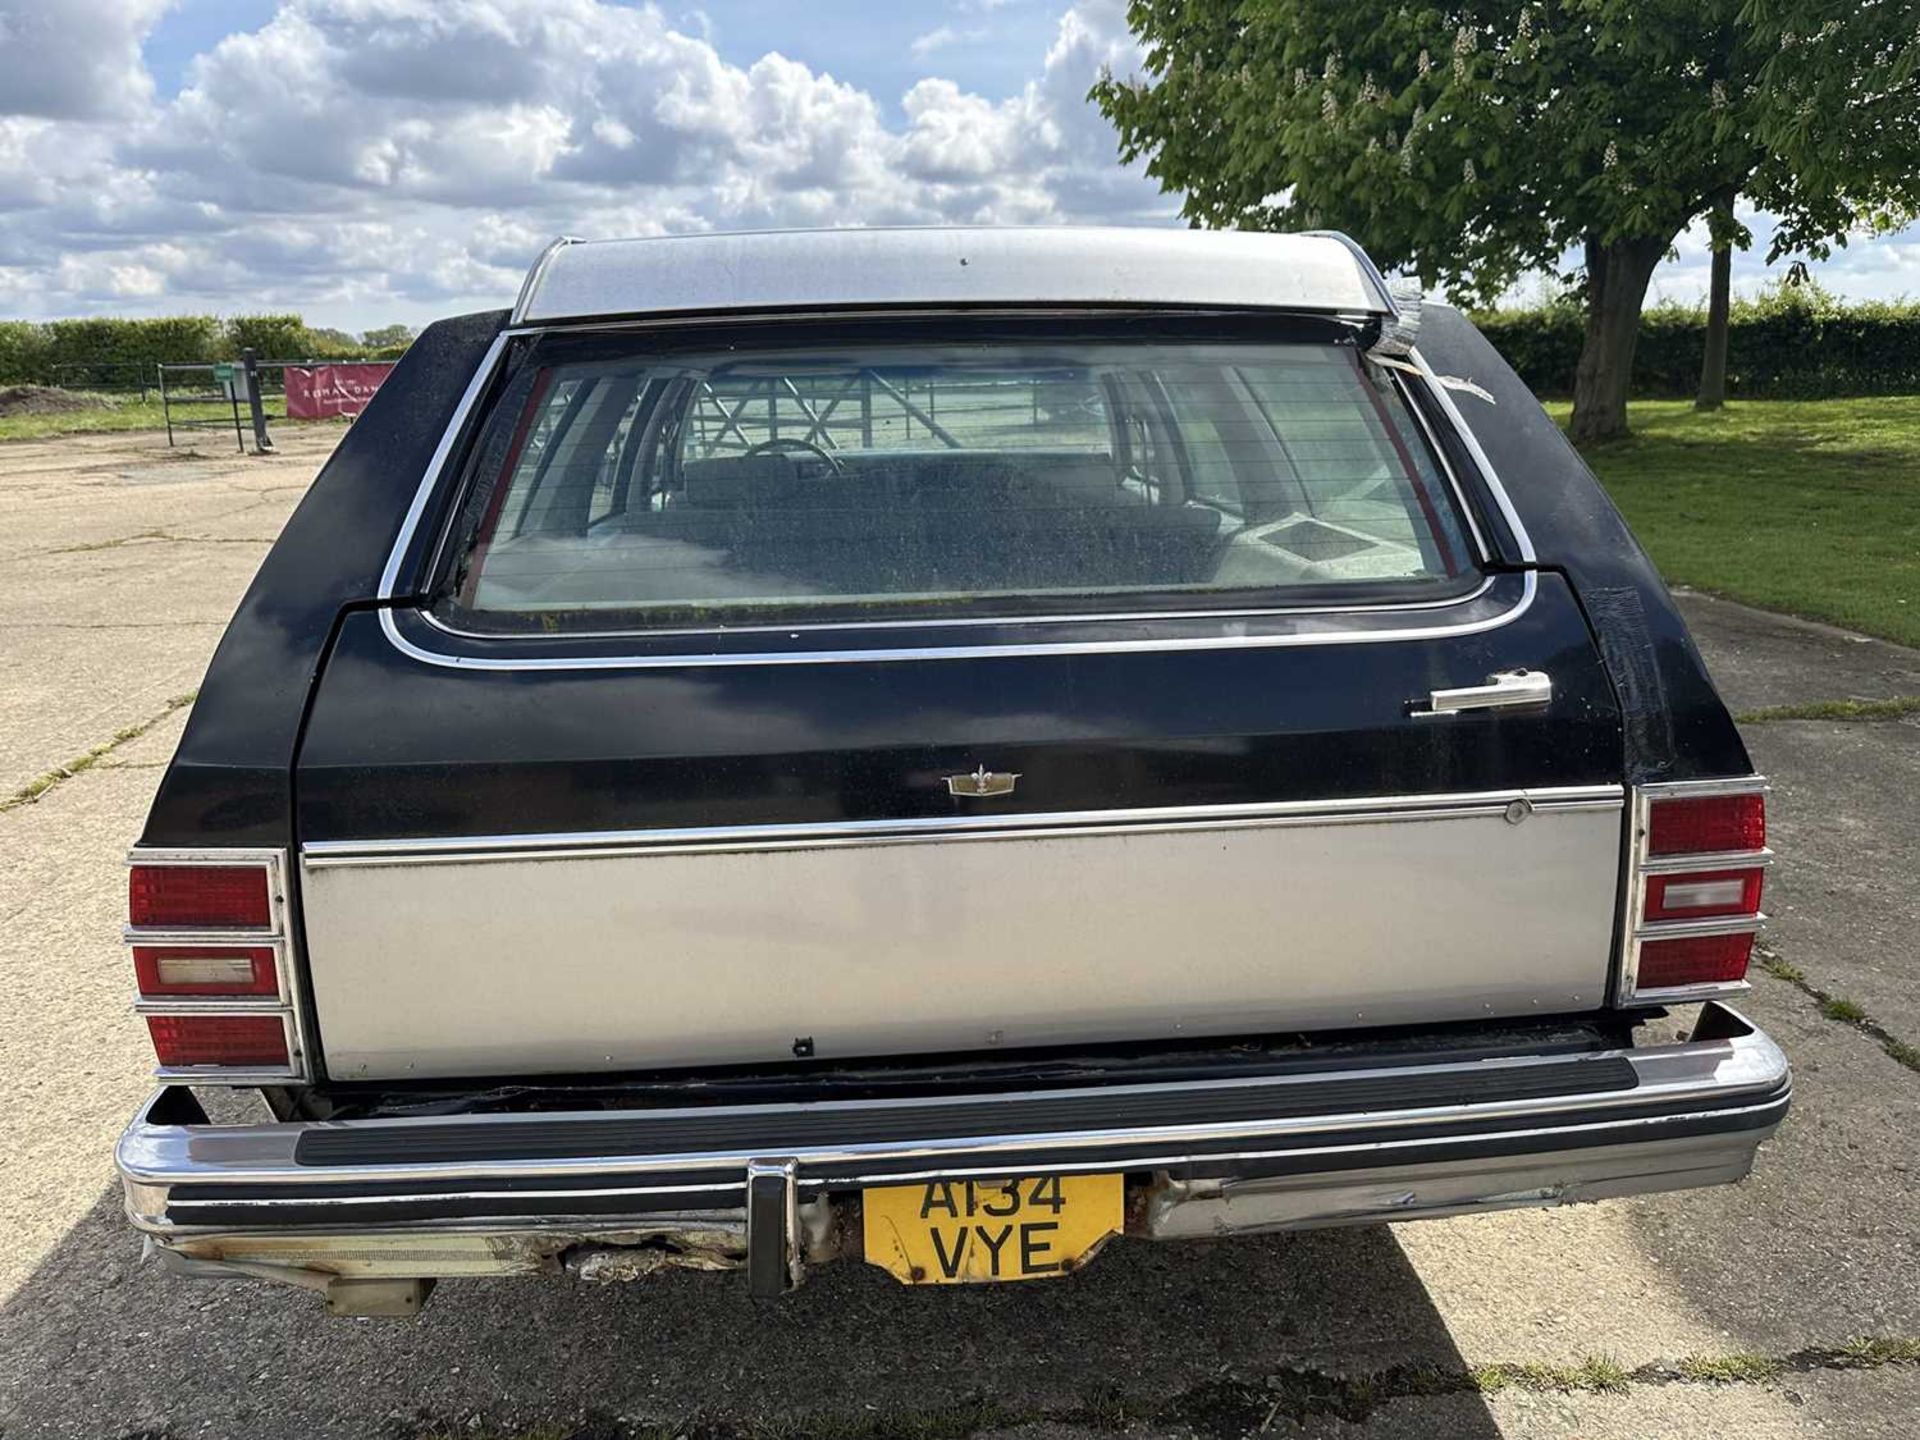 1990 Chevrolet Caprice Station Wagon, 5000cc V8, automatic, reg. no. A134 VYE - Image 6 of 14